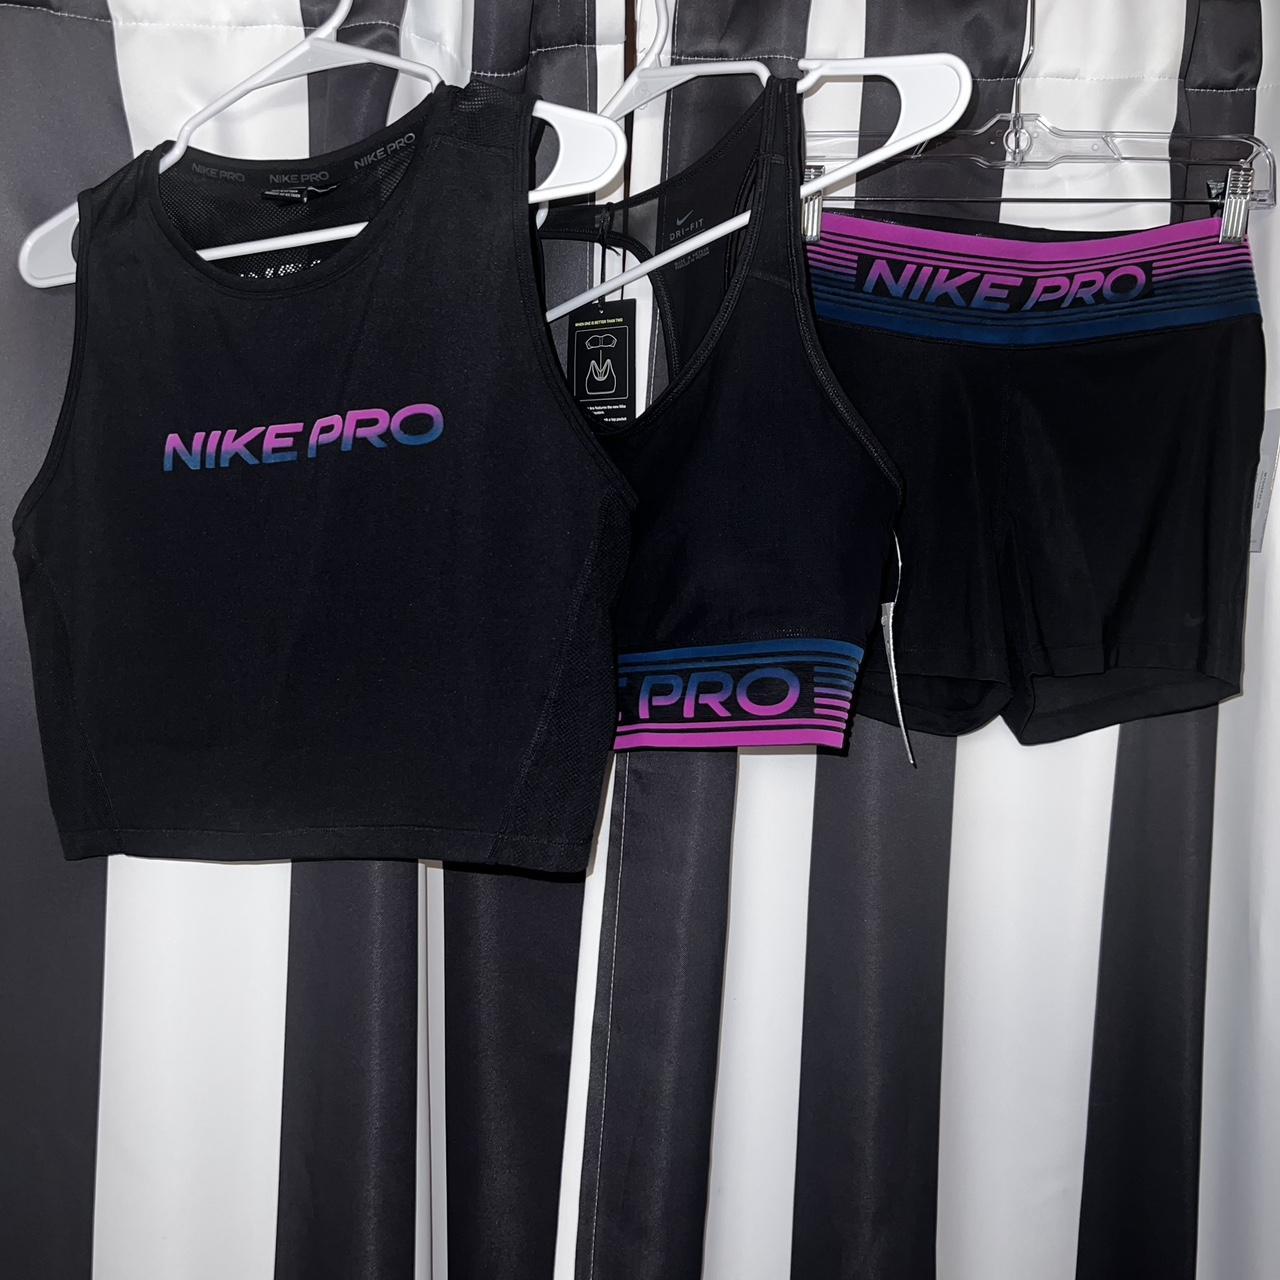 Blue Patterned Nike Pro Dri-Fit Sports Bra Size M - Depop